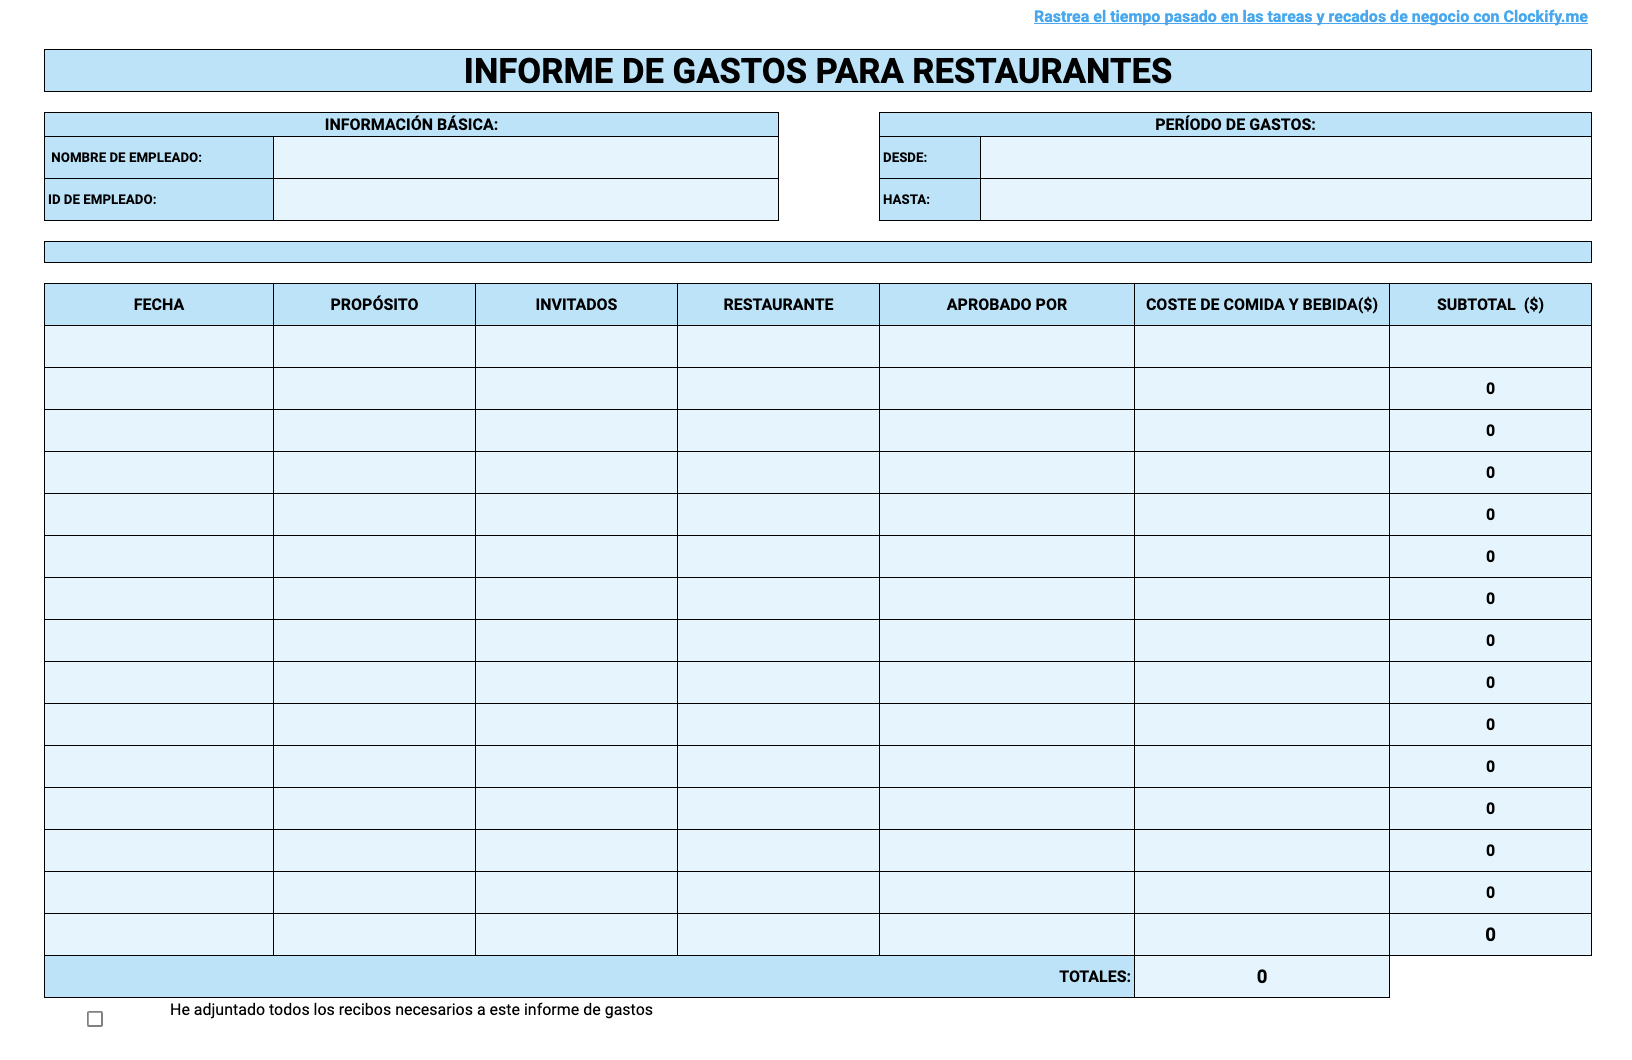 Vista previa de la Plantilla de informes de gastos para restaurantes